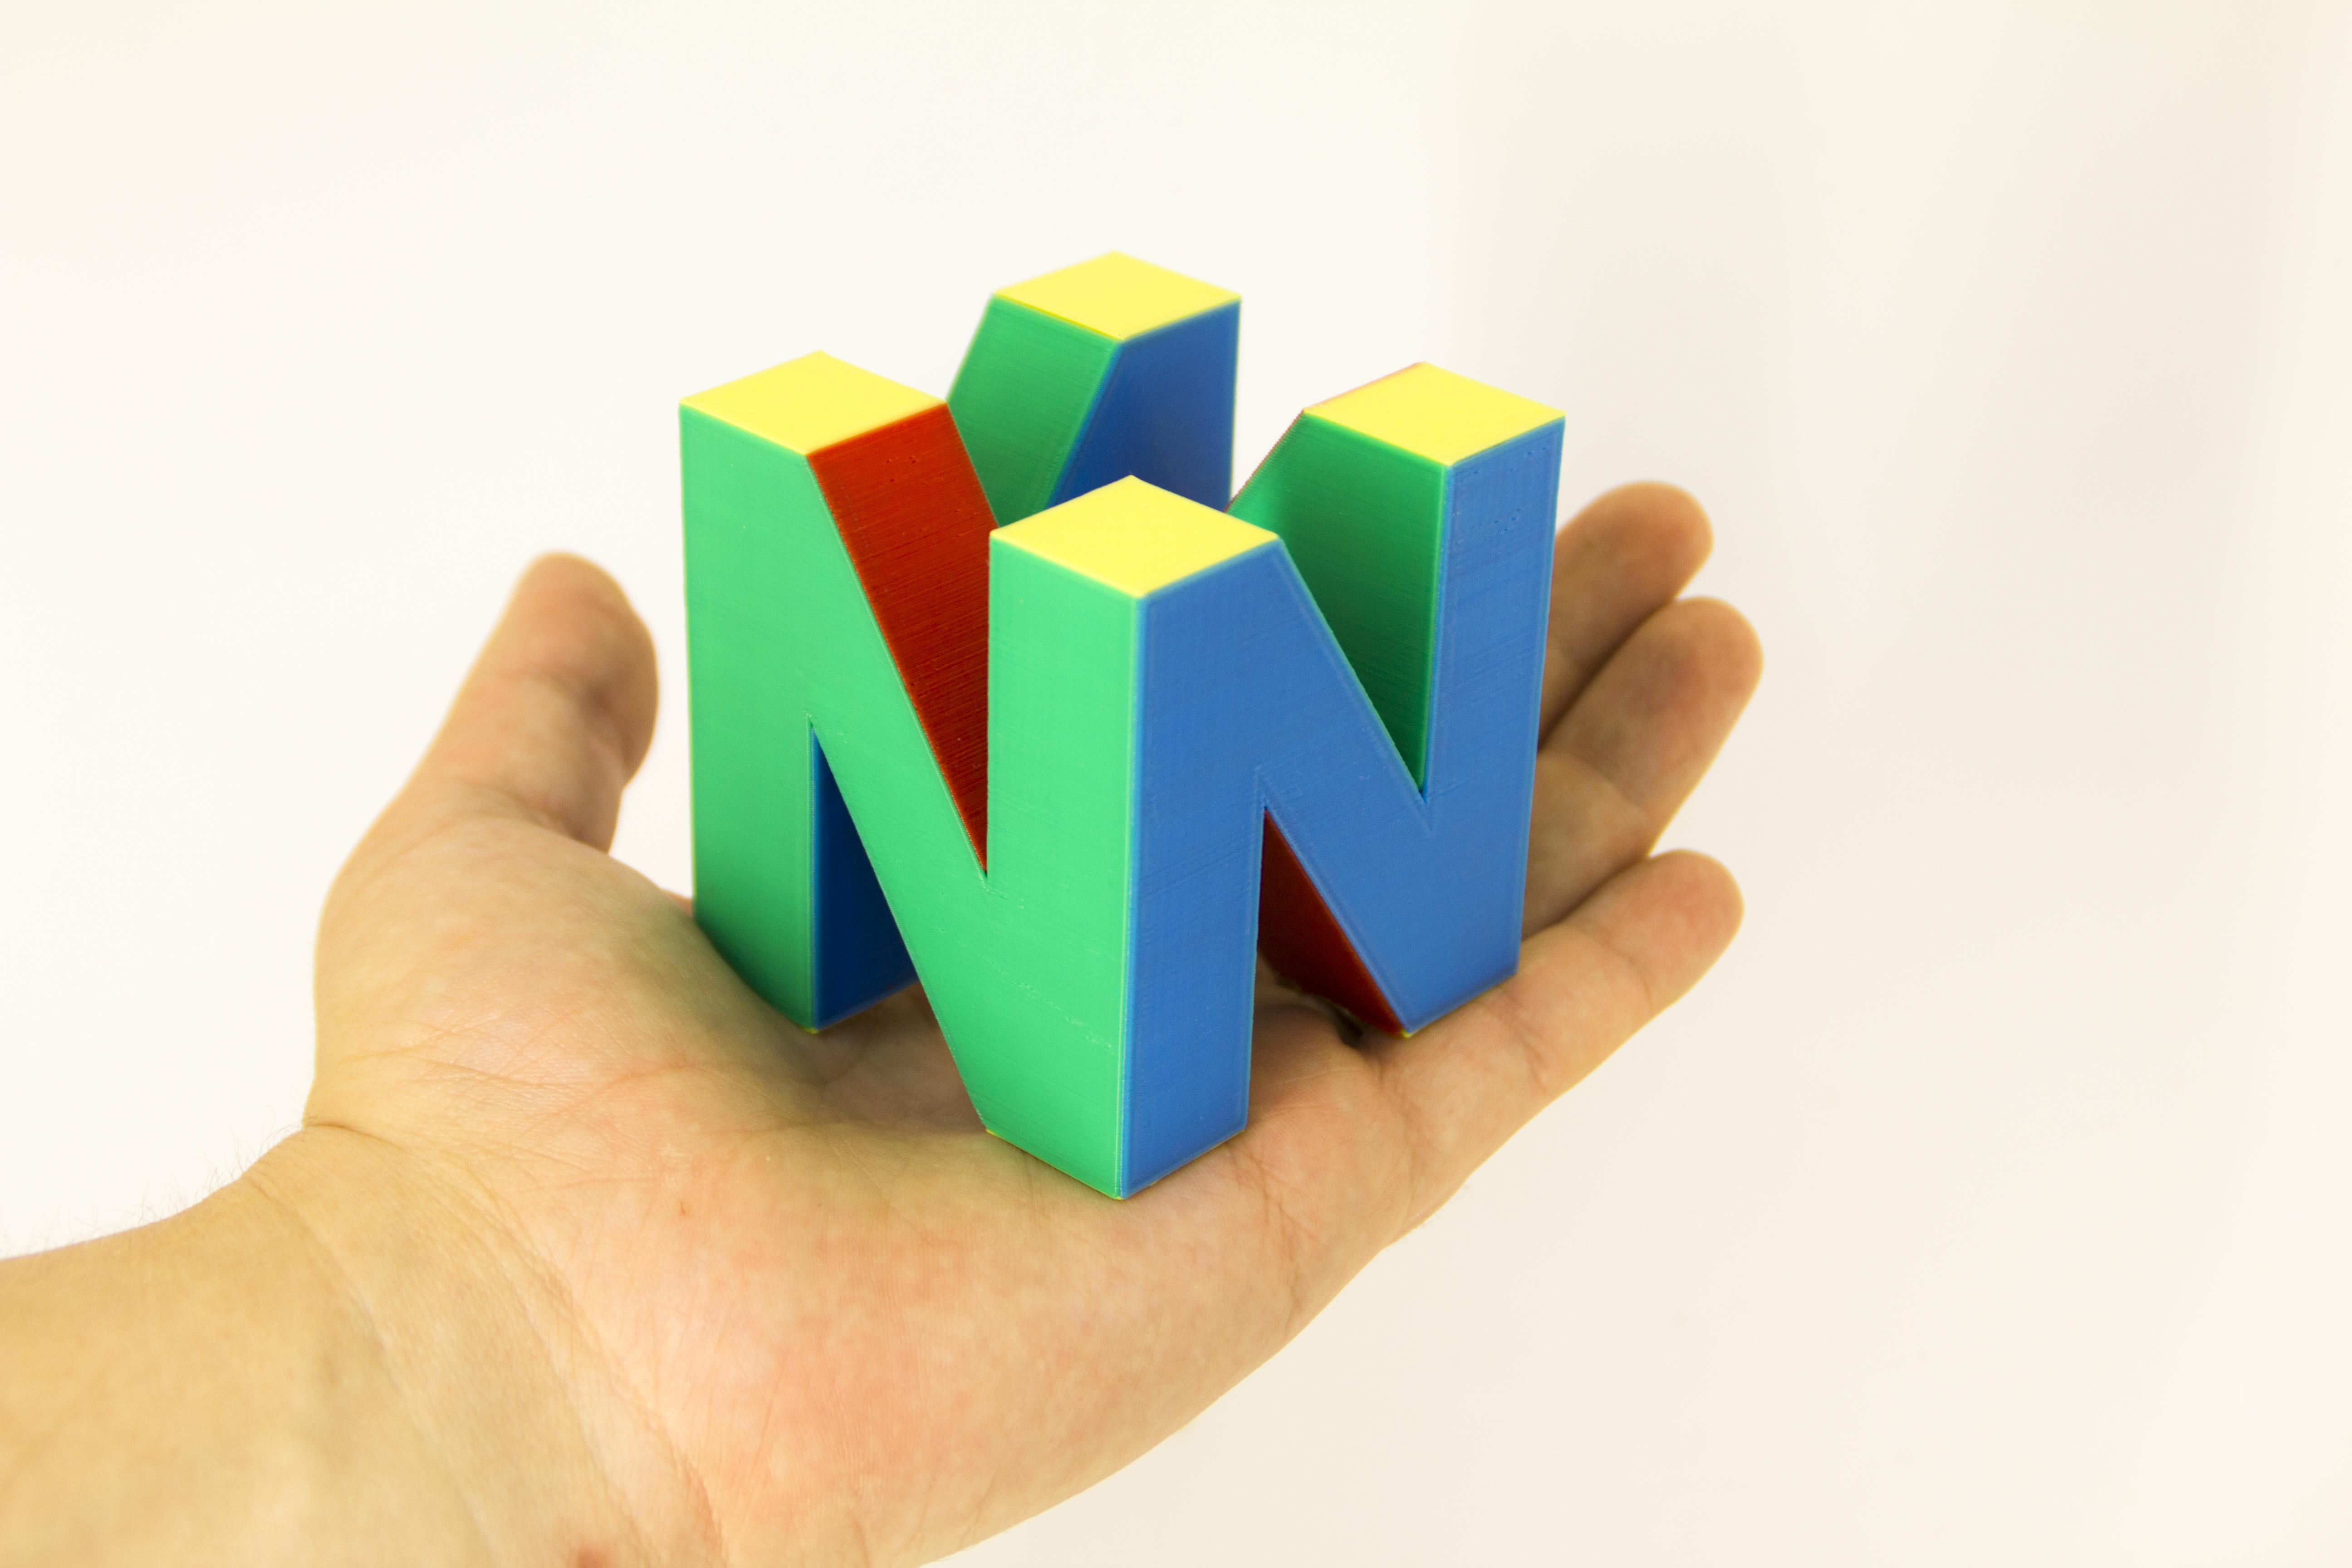 N64 Logo - I designed and 3D printed this n64 logo using an MMU